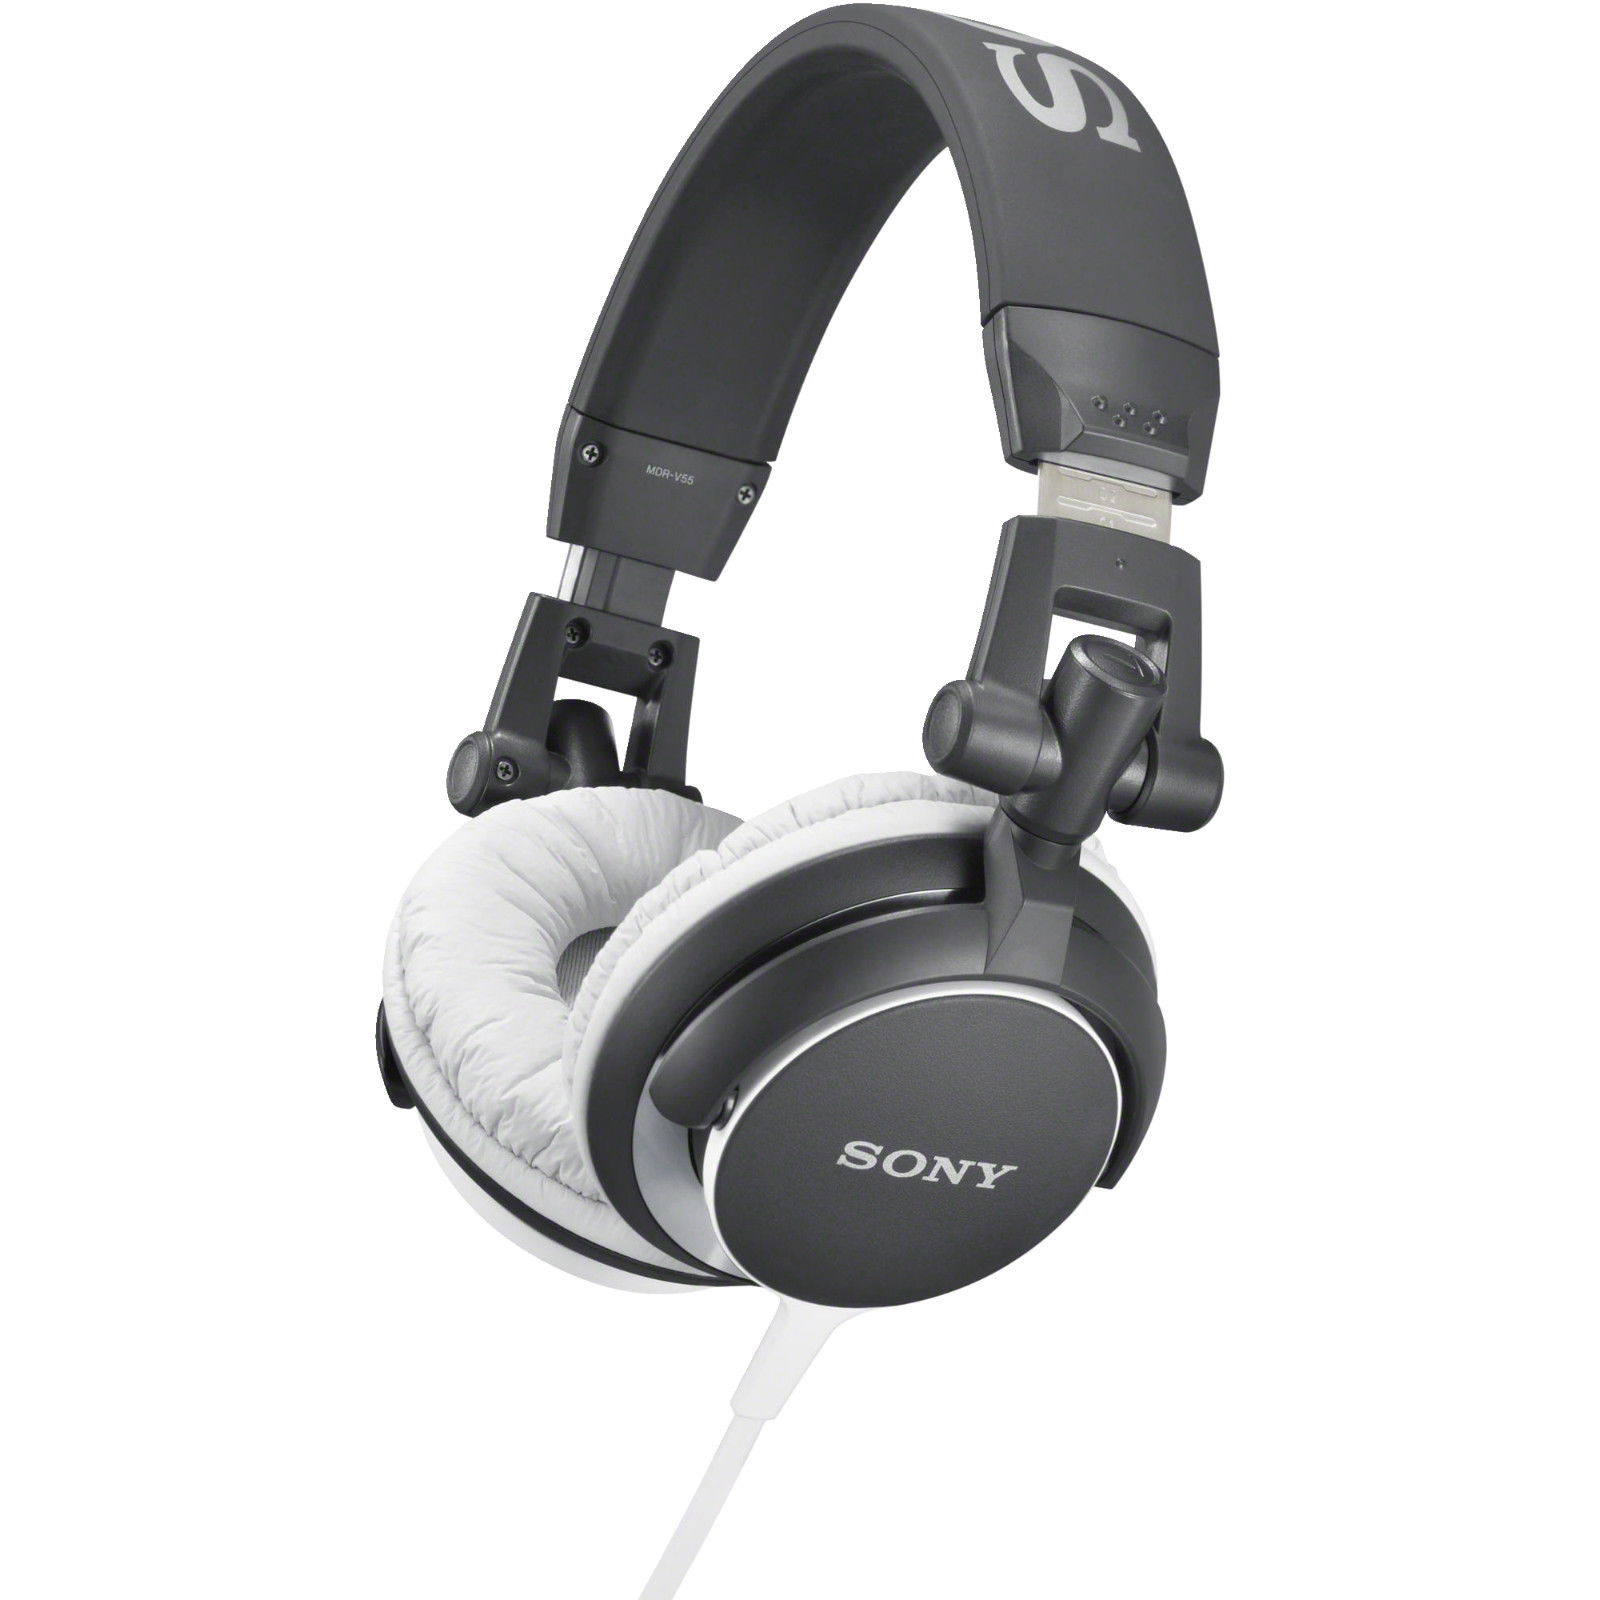 Bild zu Over-Ear Kopfhörer Sony MDR-V55 für 23€